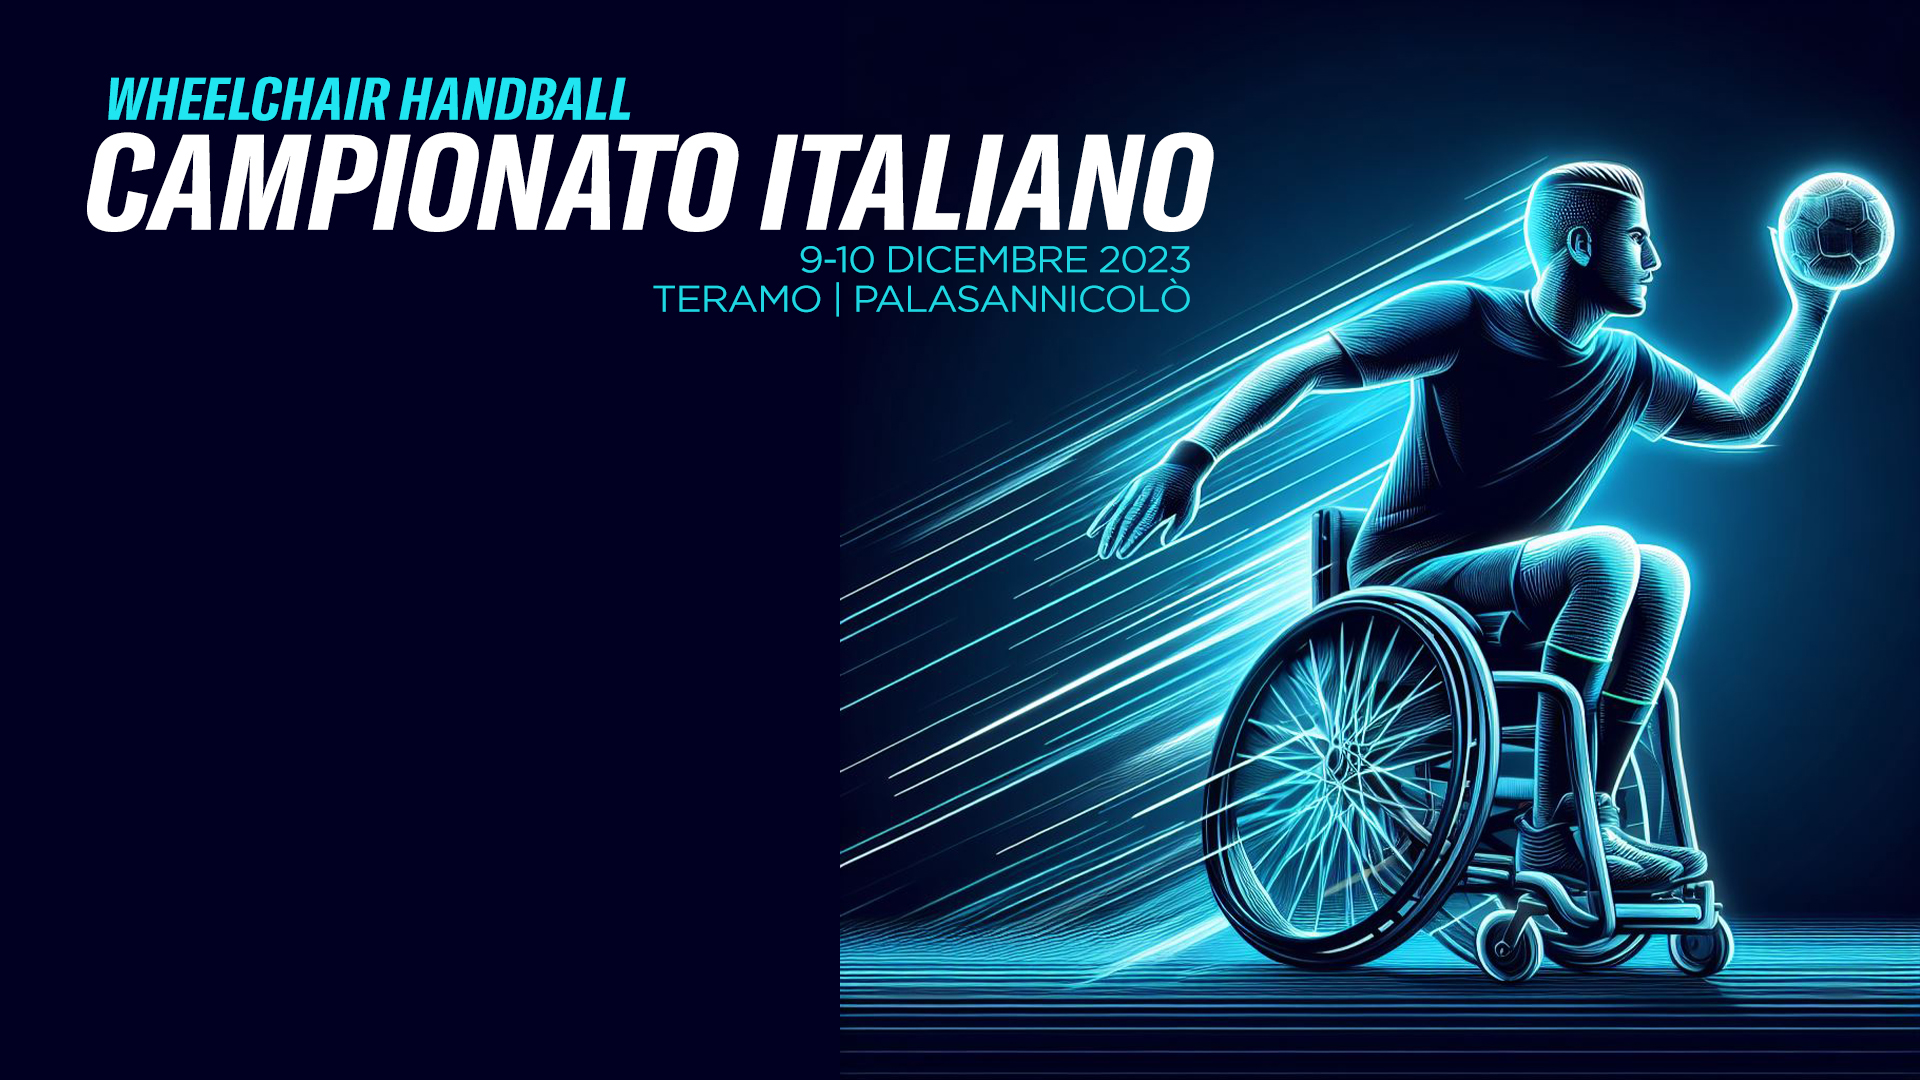 images/2023/wheelchair-copertina.jpg#joomlaImage://local-images/2023/wheelchair-copertina.jpg?width=1920&height=1080